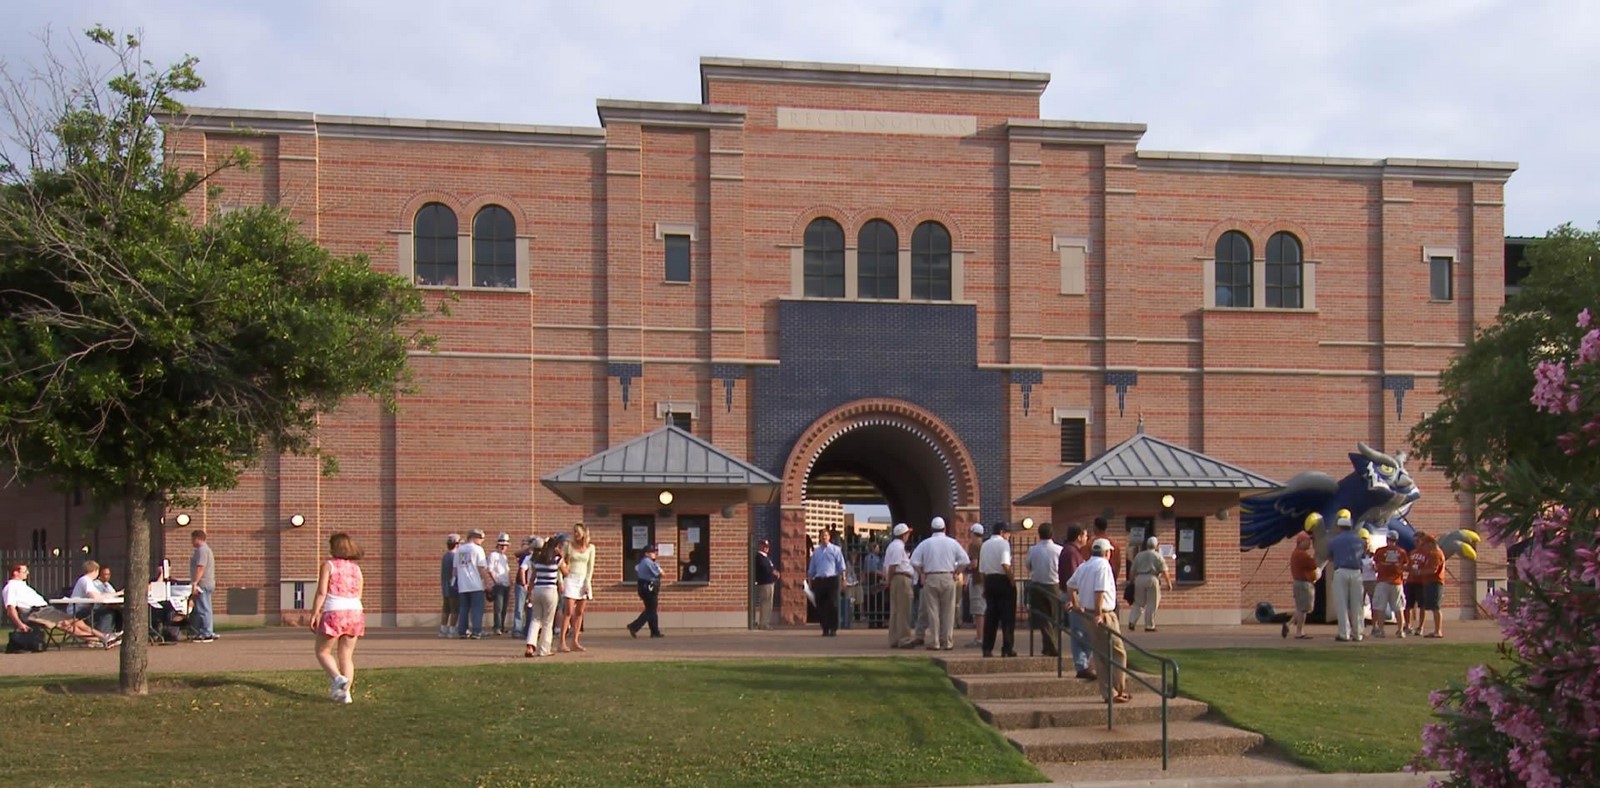 Rice University Reckling Park Baseball Stadium - Sheet2